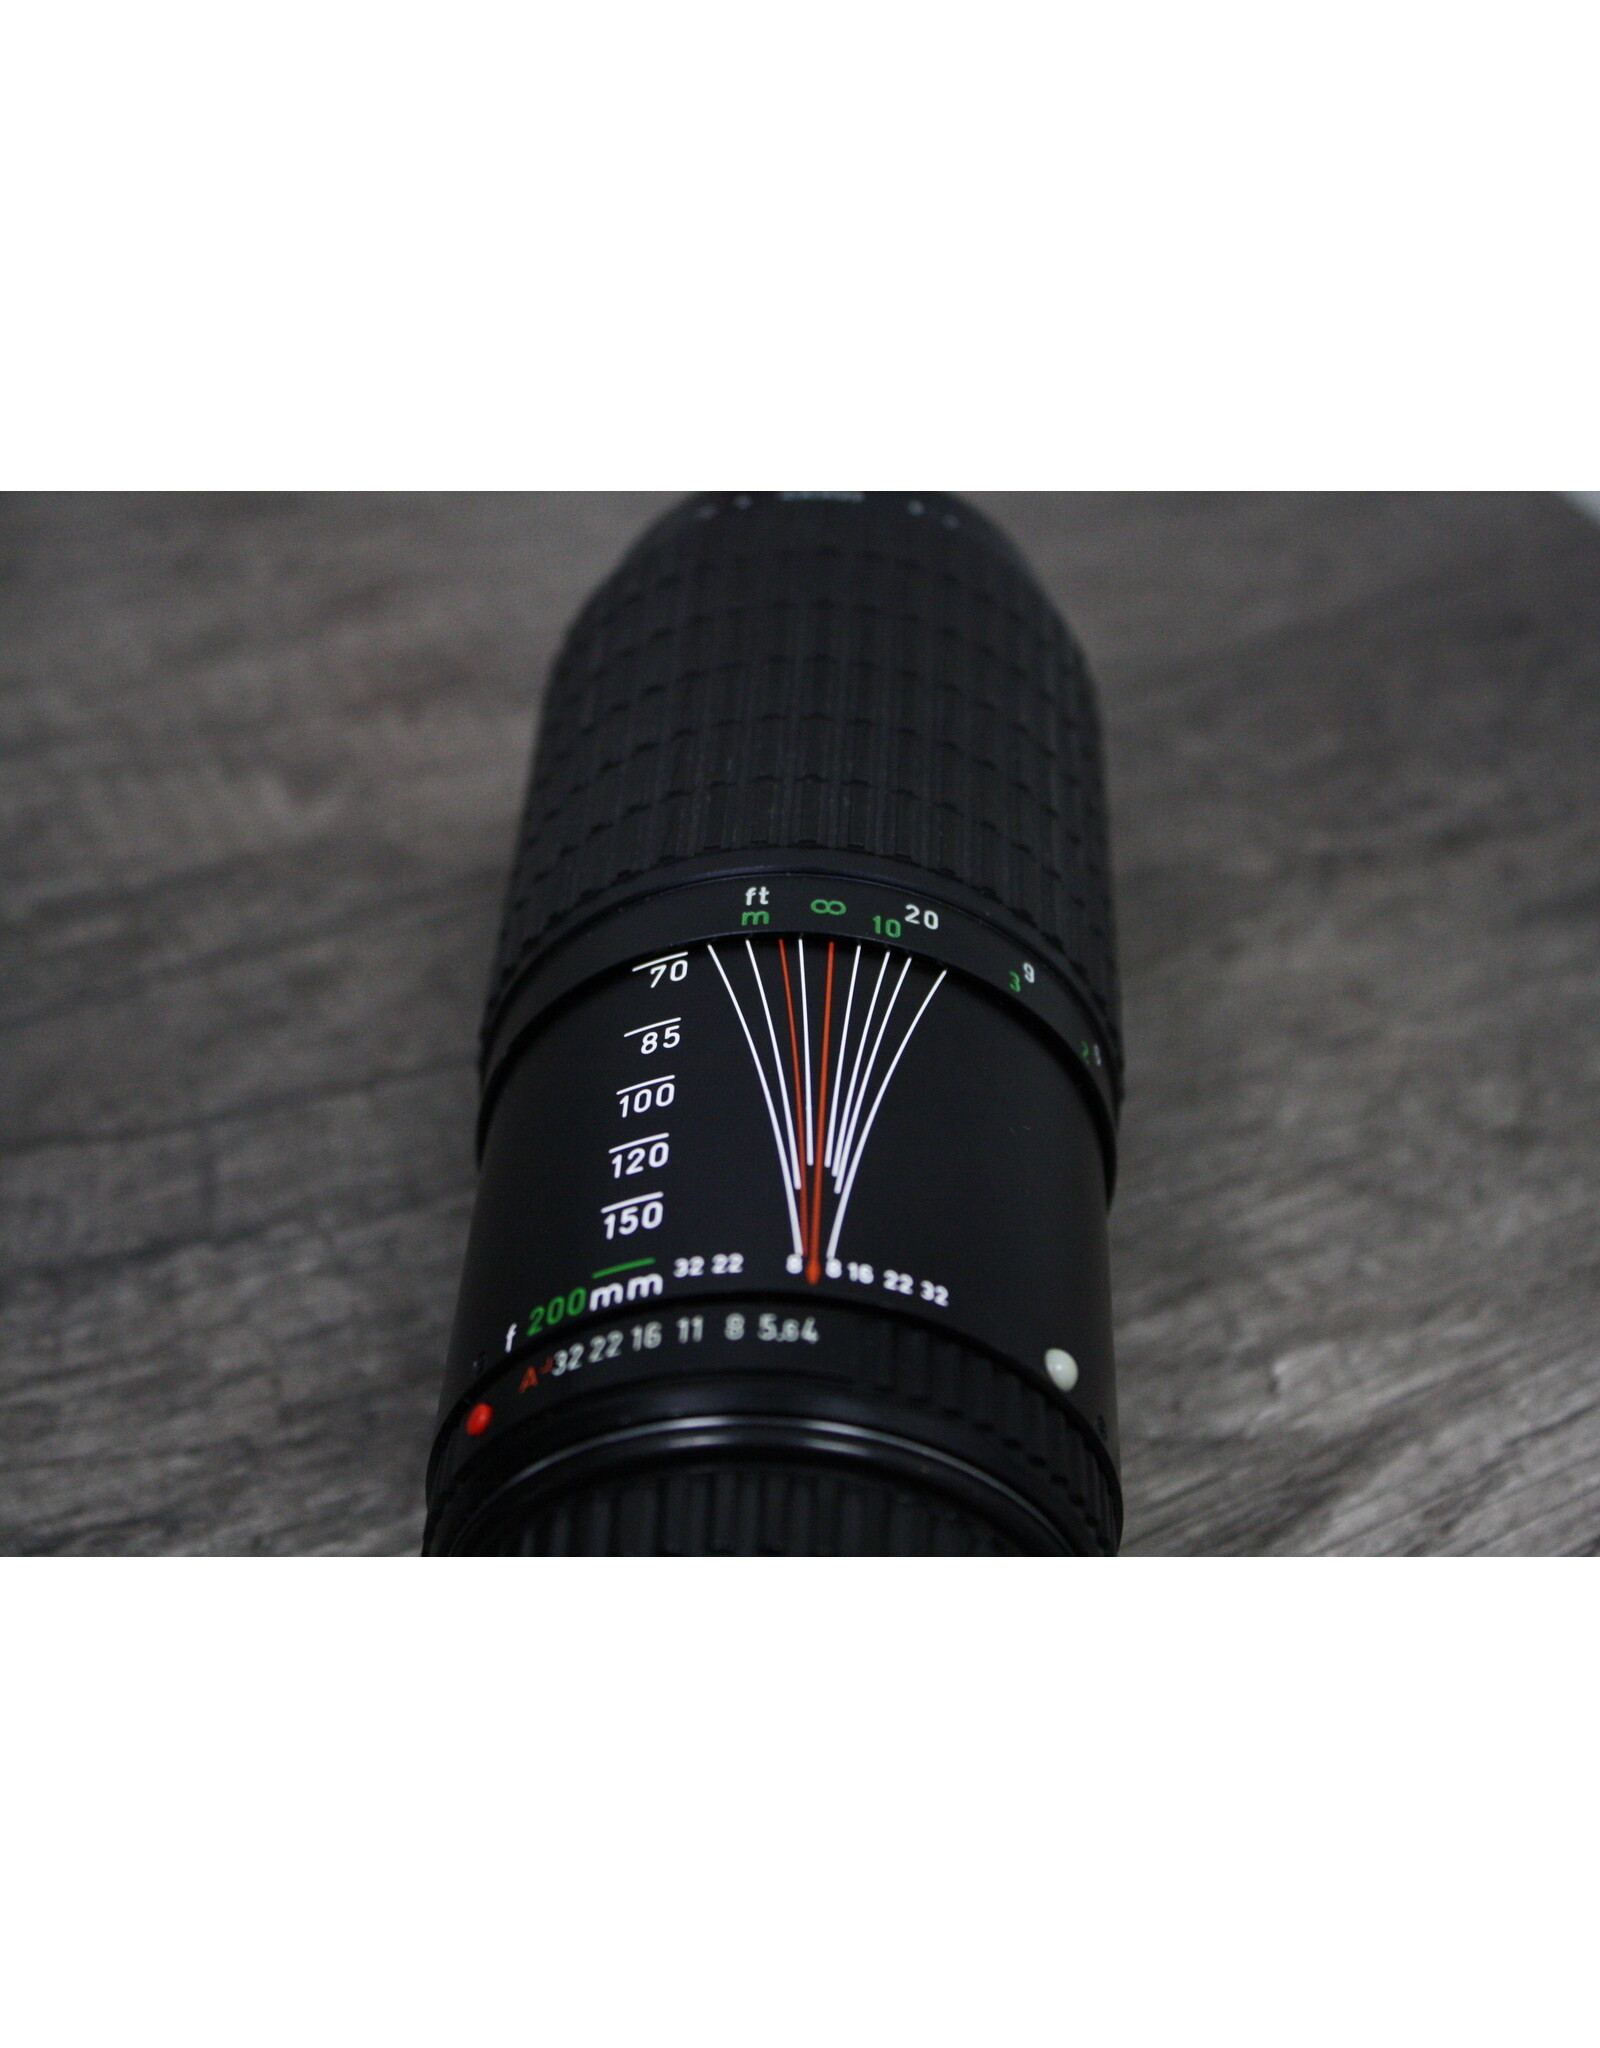 Pentax Takumar-A 70-200mm f4 Lens (Pre-owned)